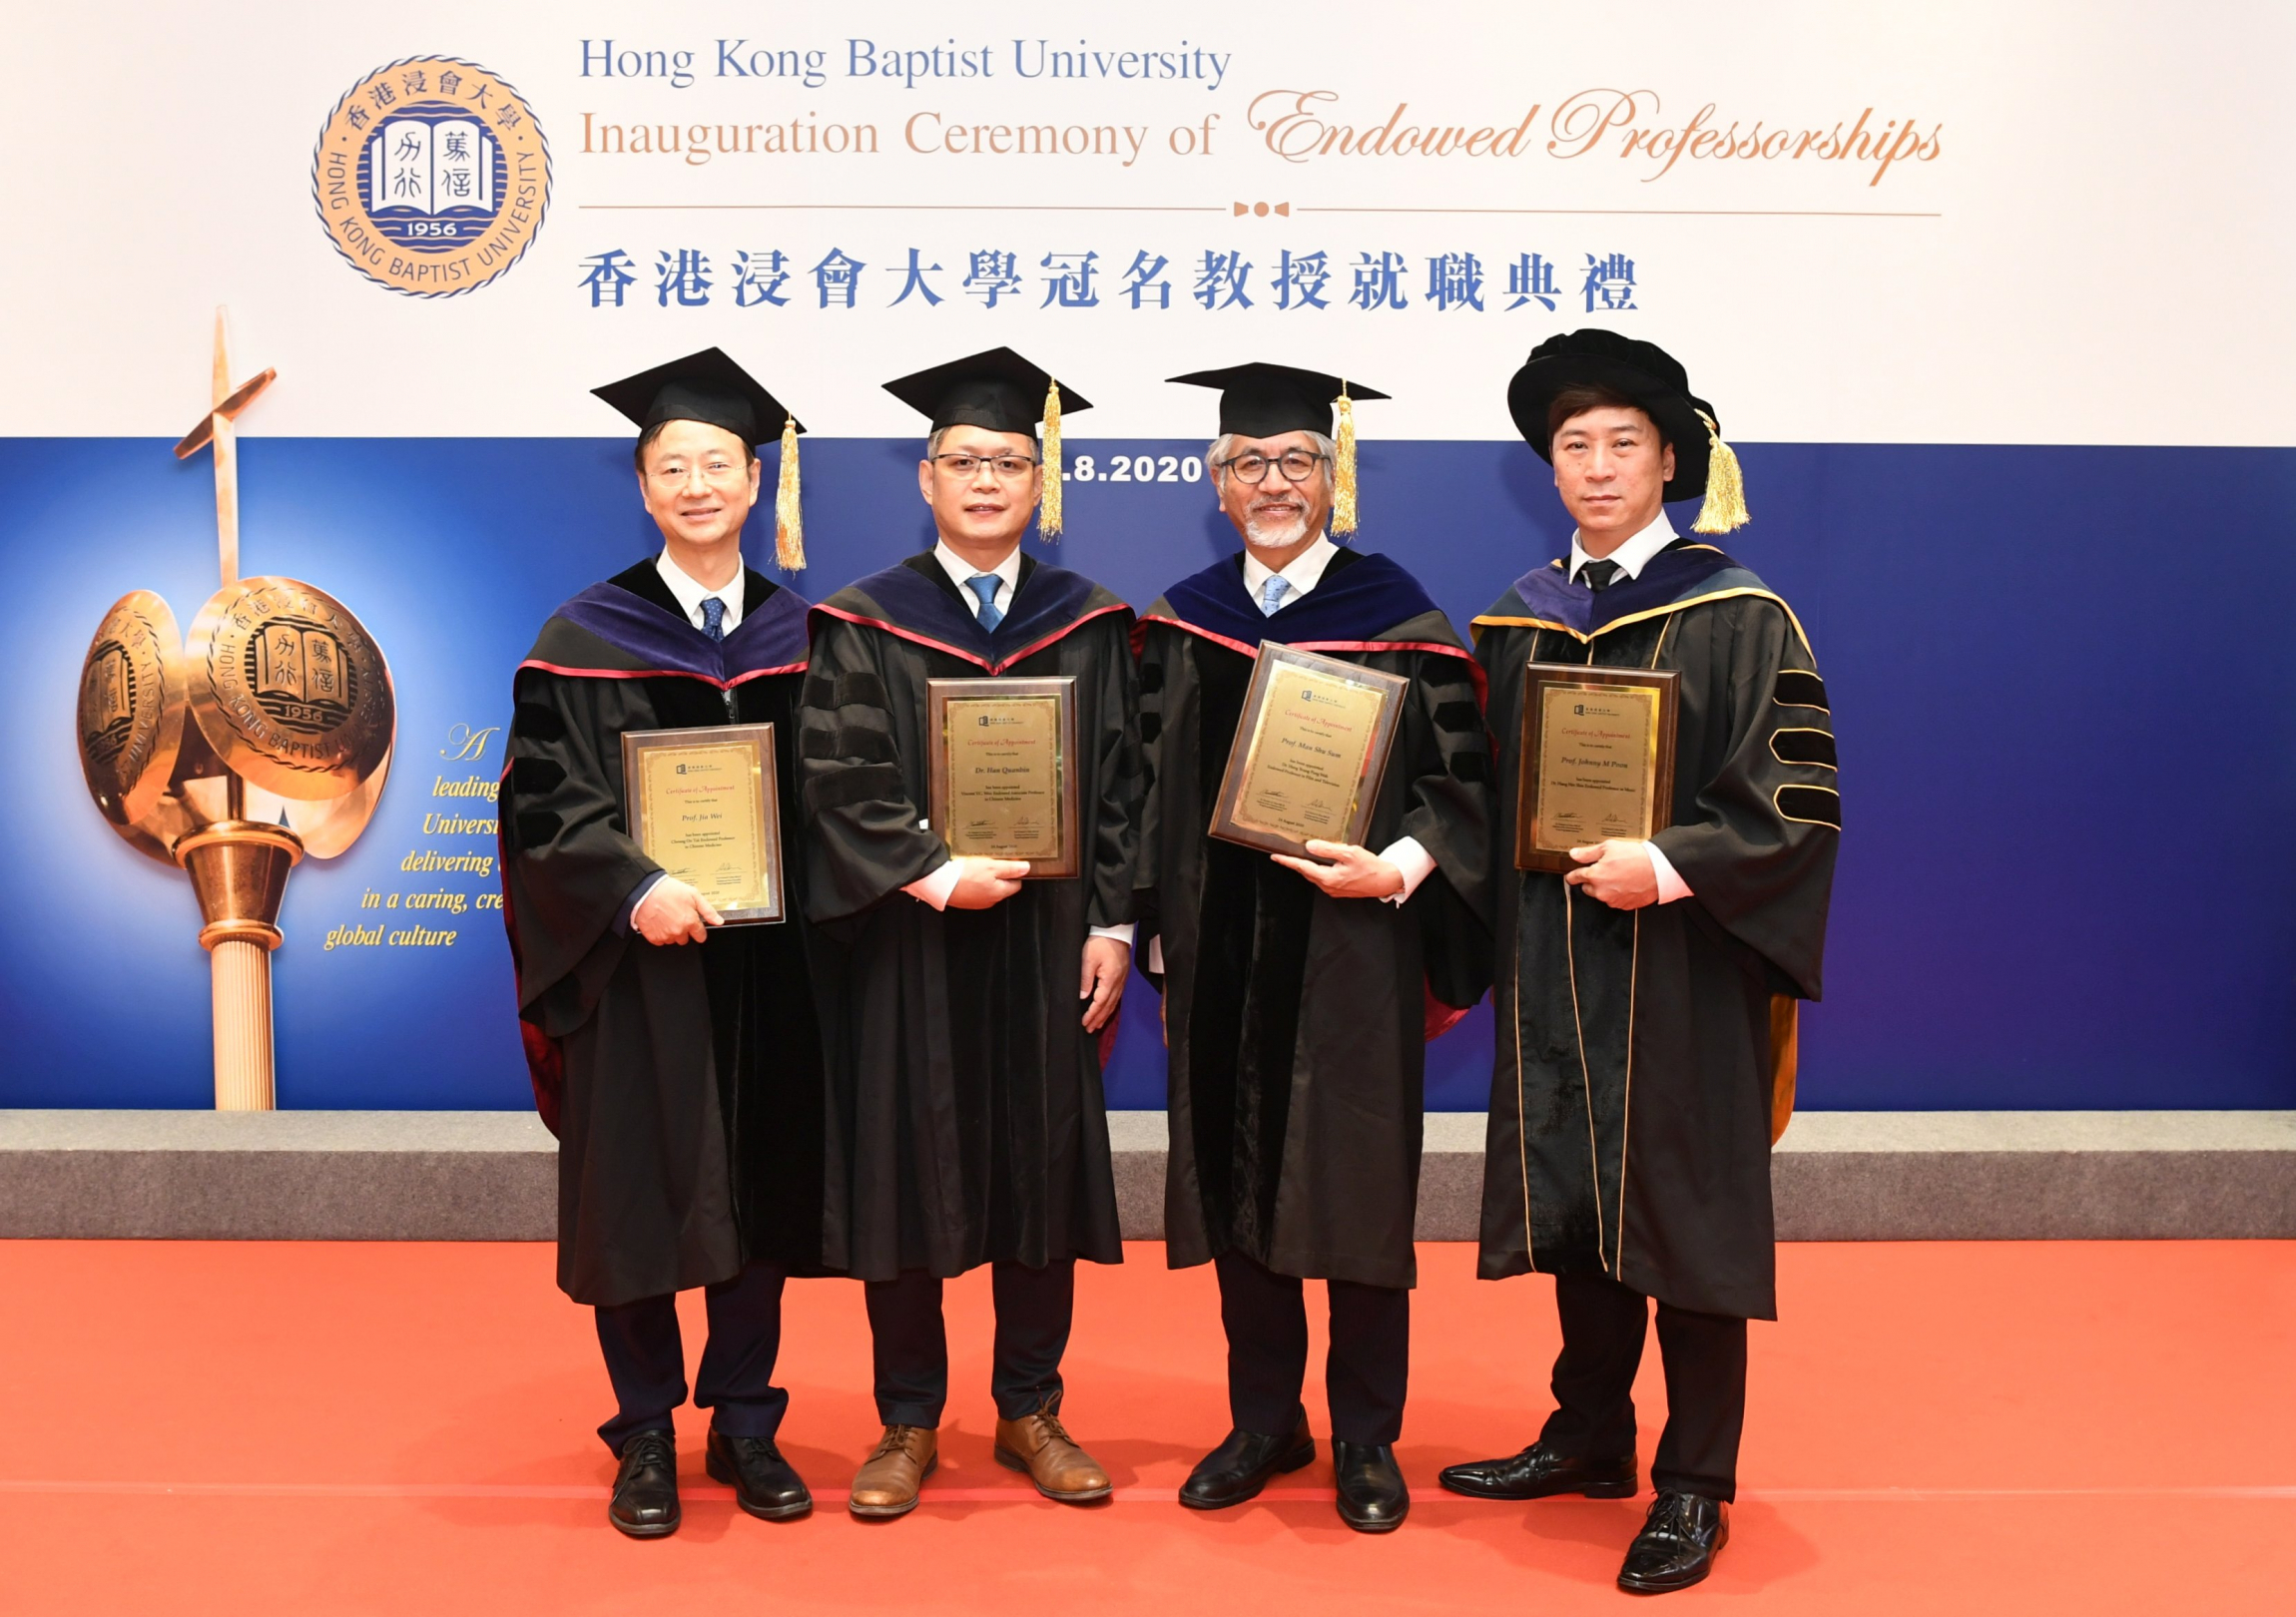 Distinguished scholars honoured with endowed professorships